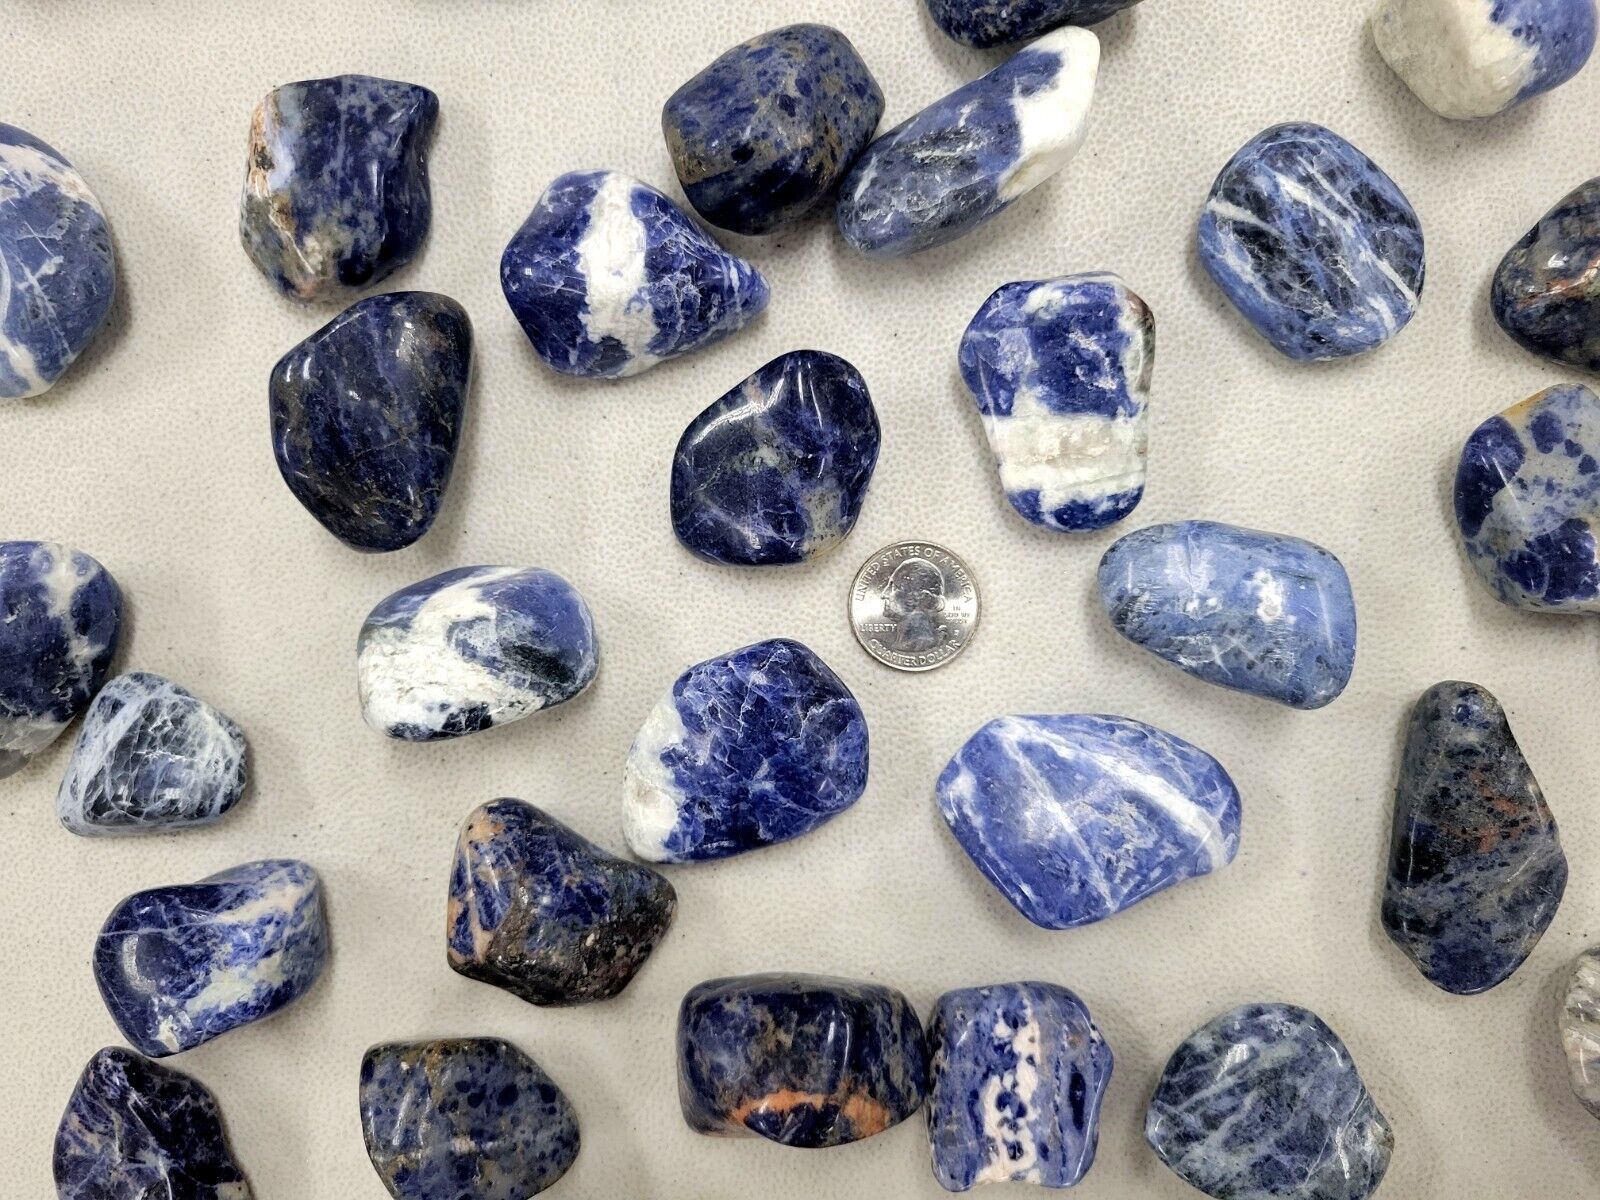 Sodalite Tumbled Stone Large Size Polished Crystal Gemstone for Healing & Gifts